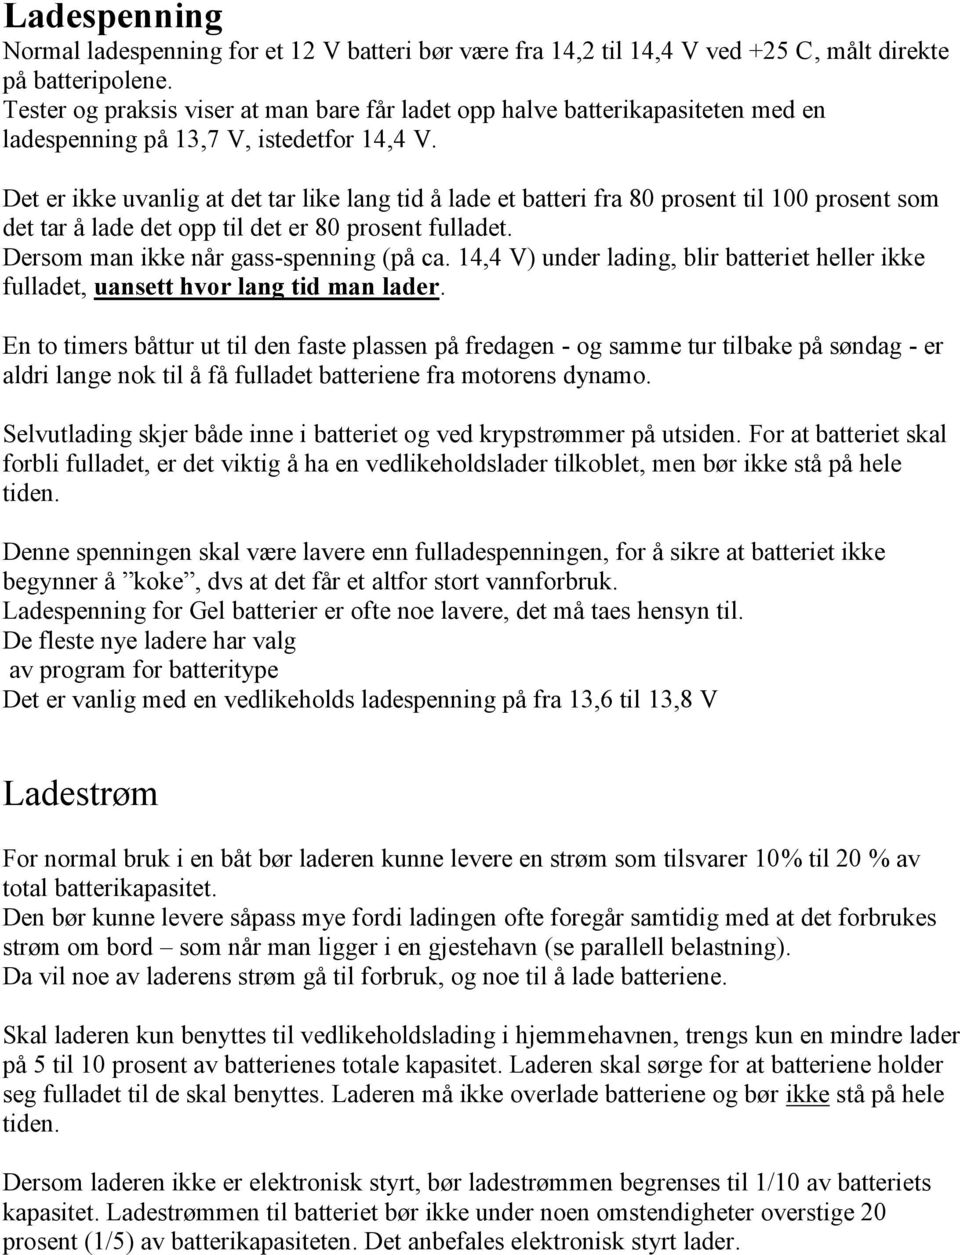 Batterier og Strøm i Båt - PDF Gratis nedlasting